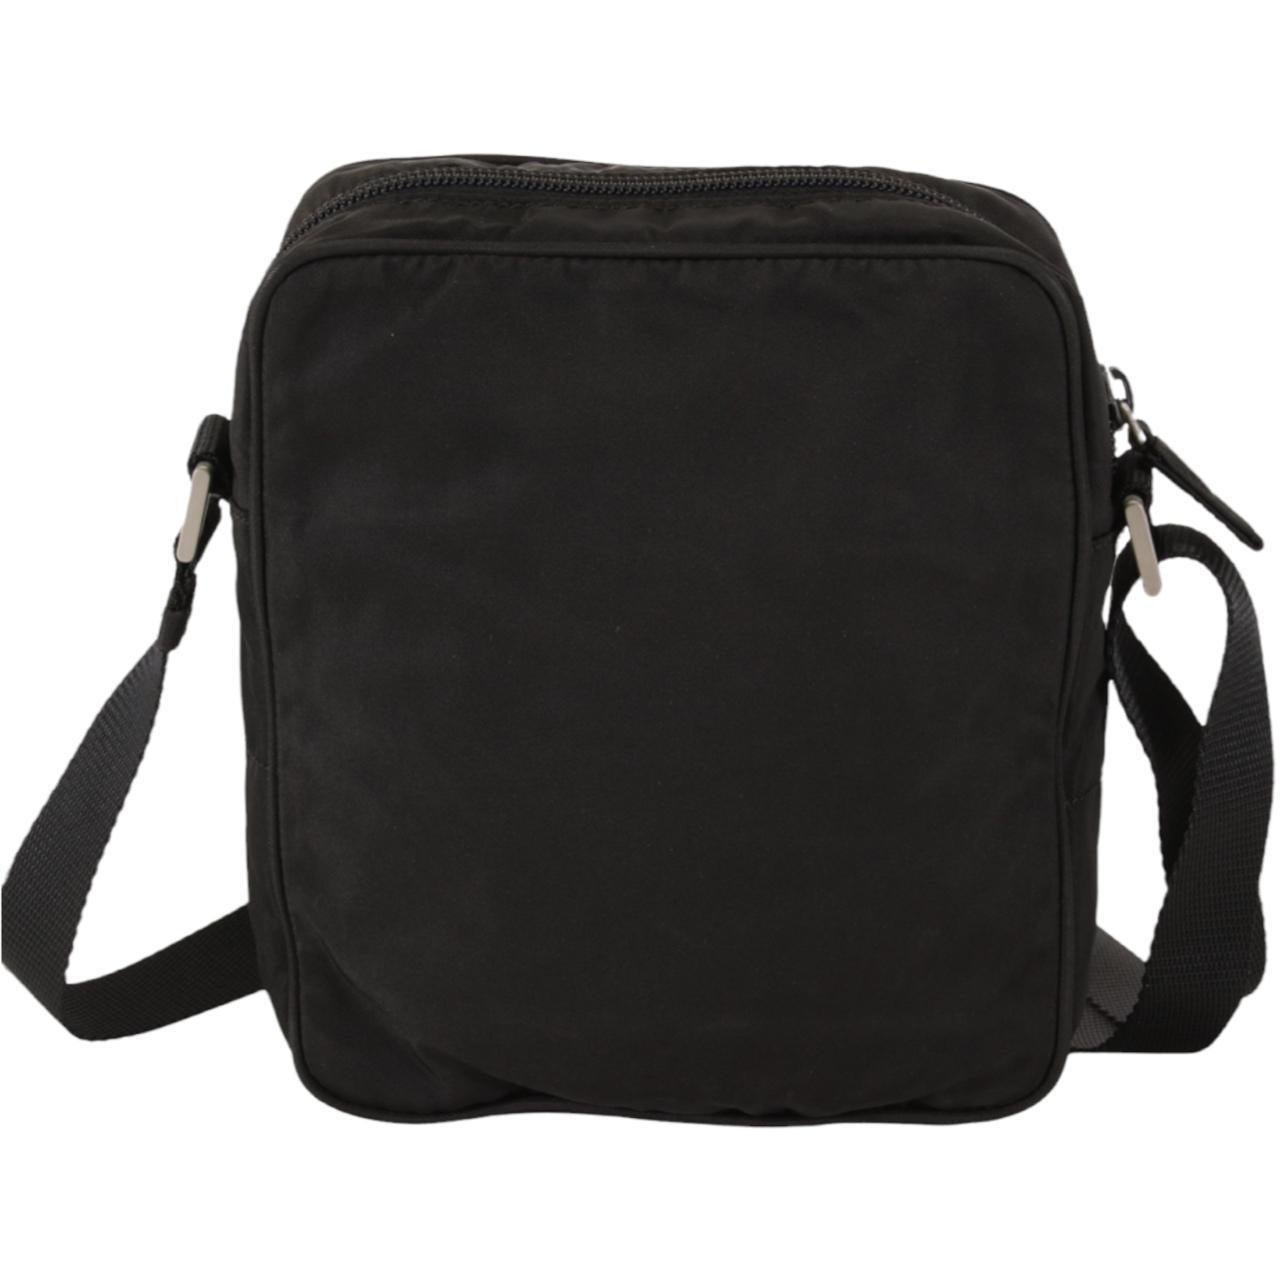 Authentic Prada Sport nylon Black Shoulder Bag - Known Source